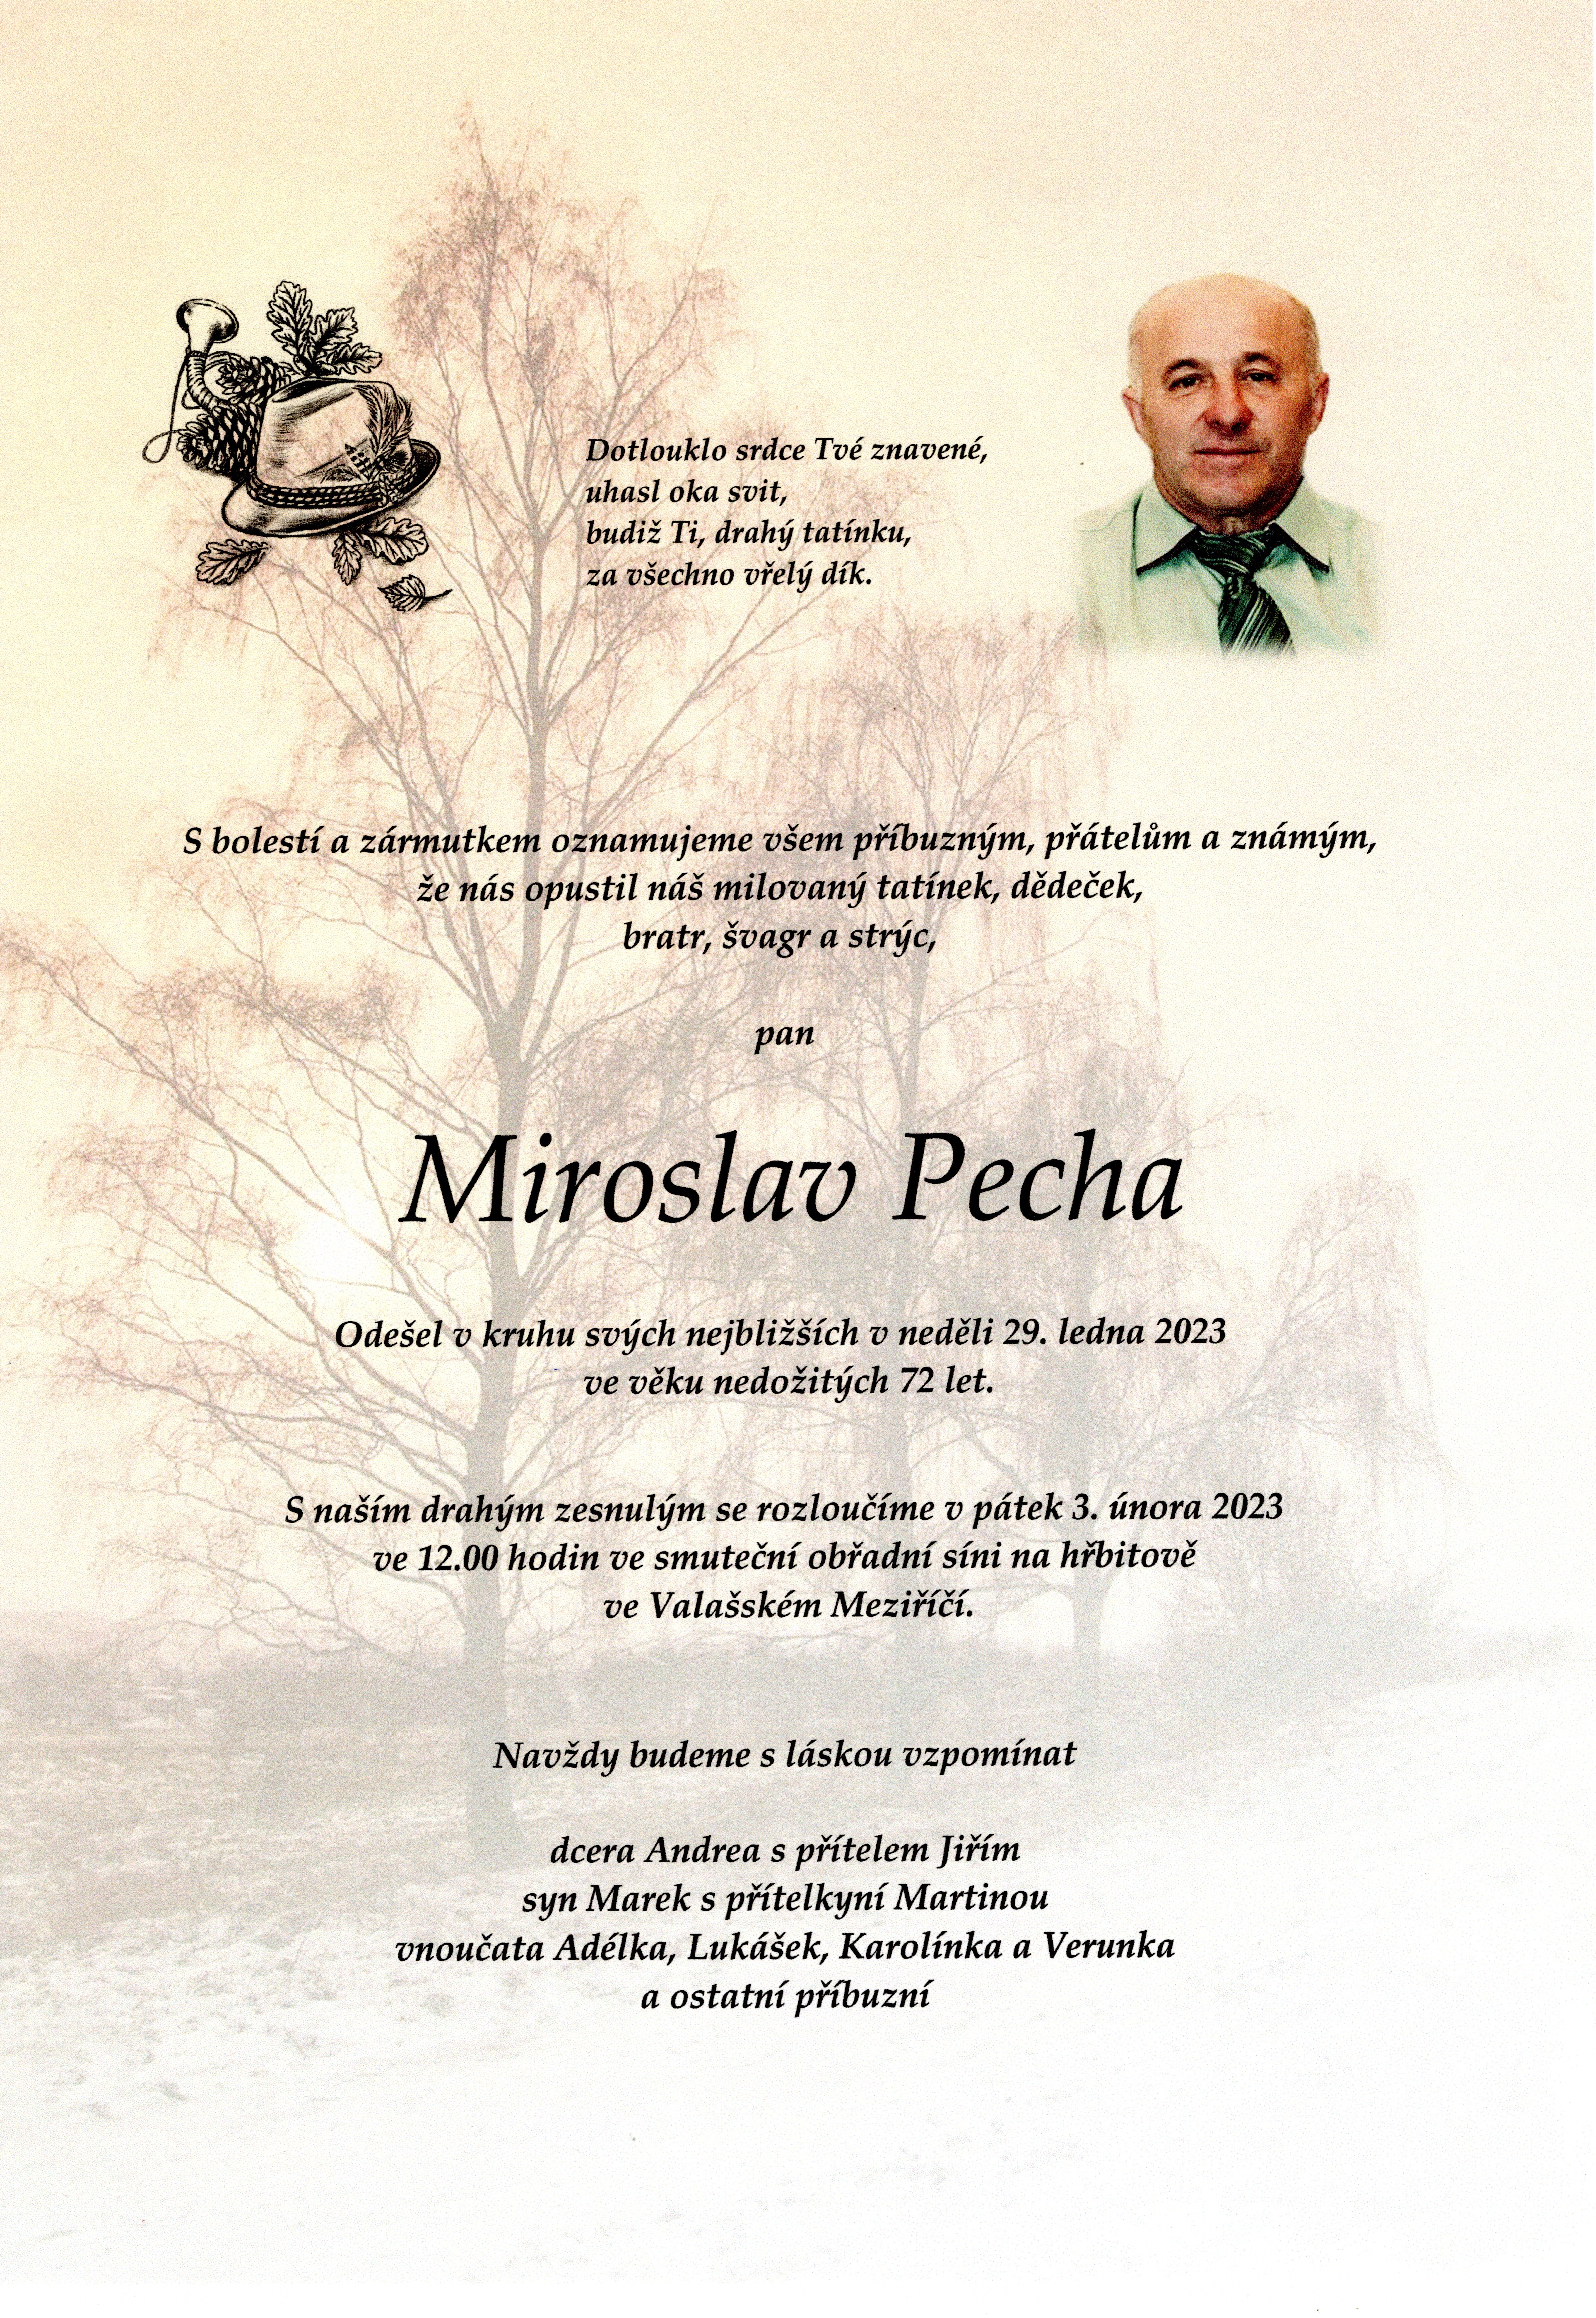 Miroslav Pecha